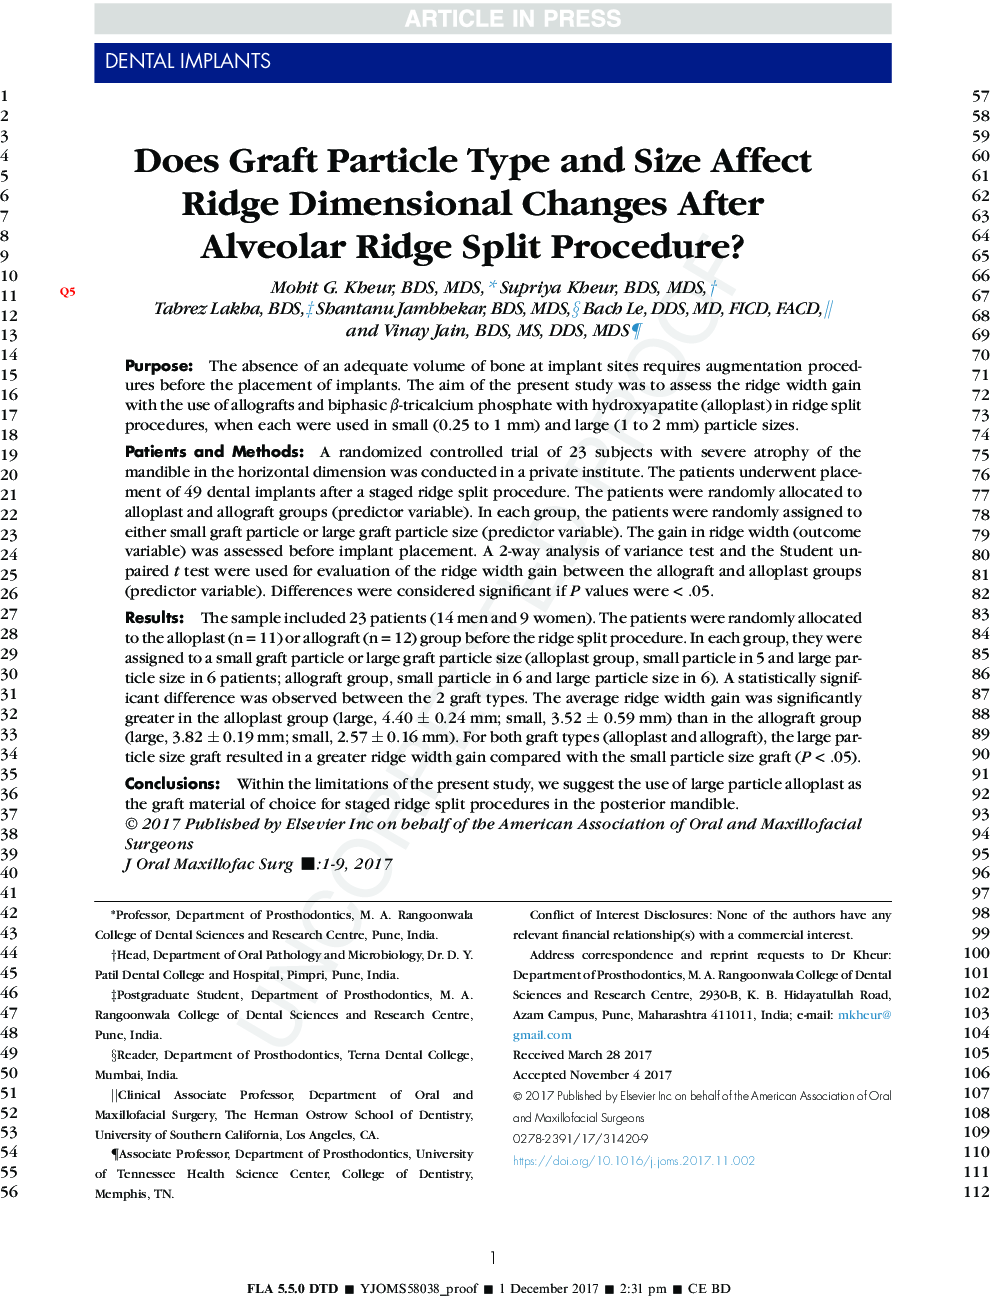 Does Graft Particle Type and Size Affect Ridge Dimensional Changes After Alveolar Ridge Split Procedure?